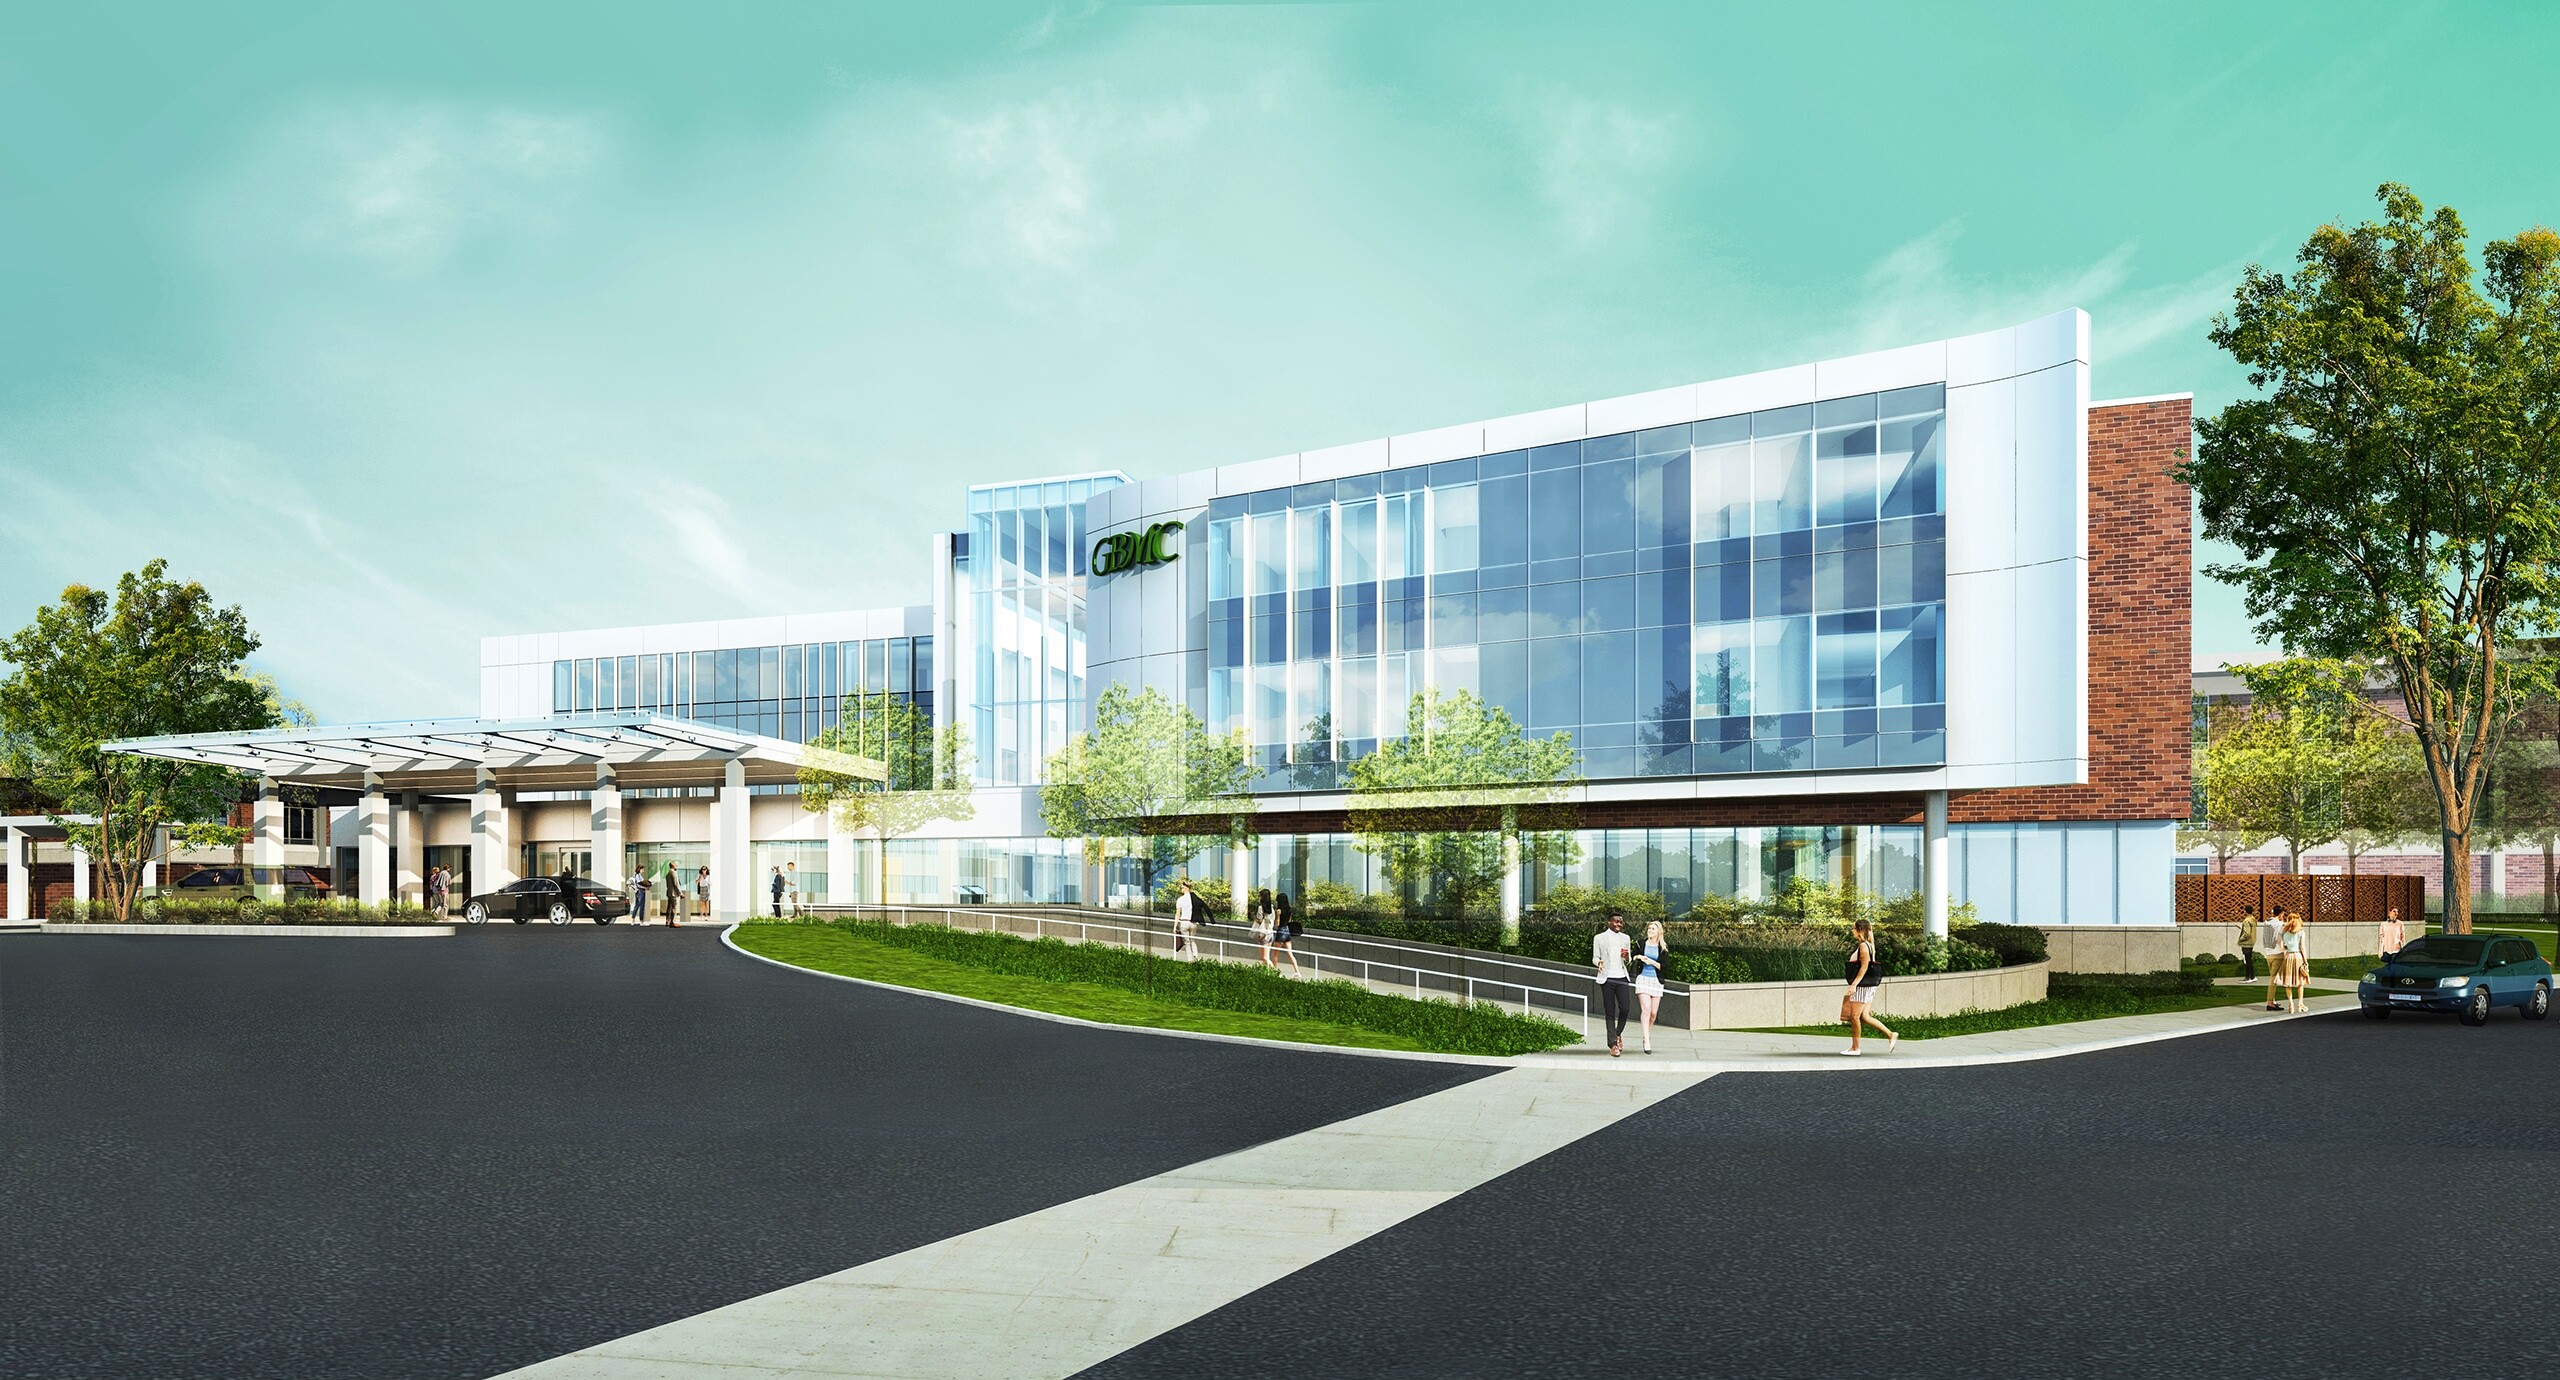 GBMC's proposed patient center